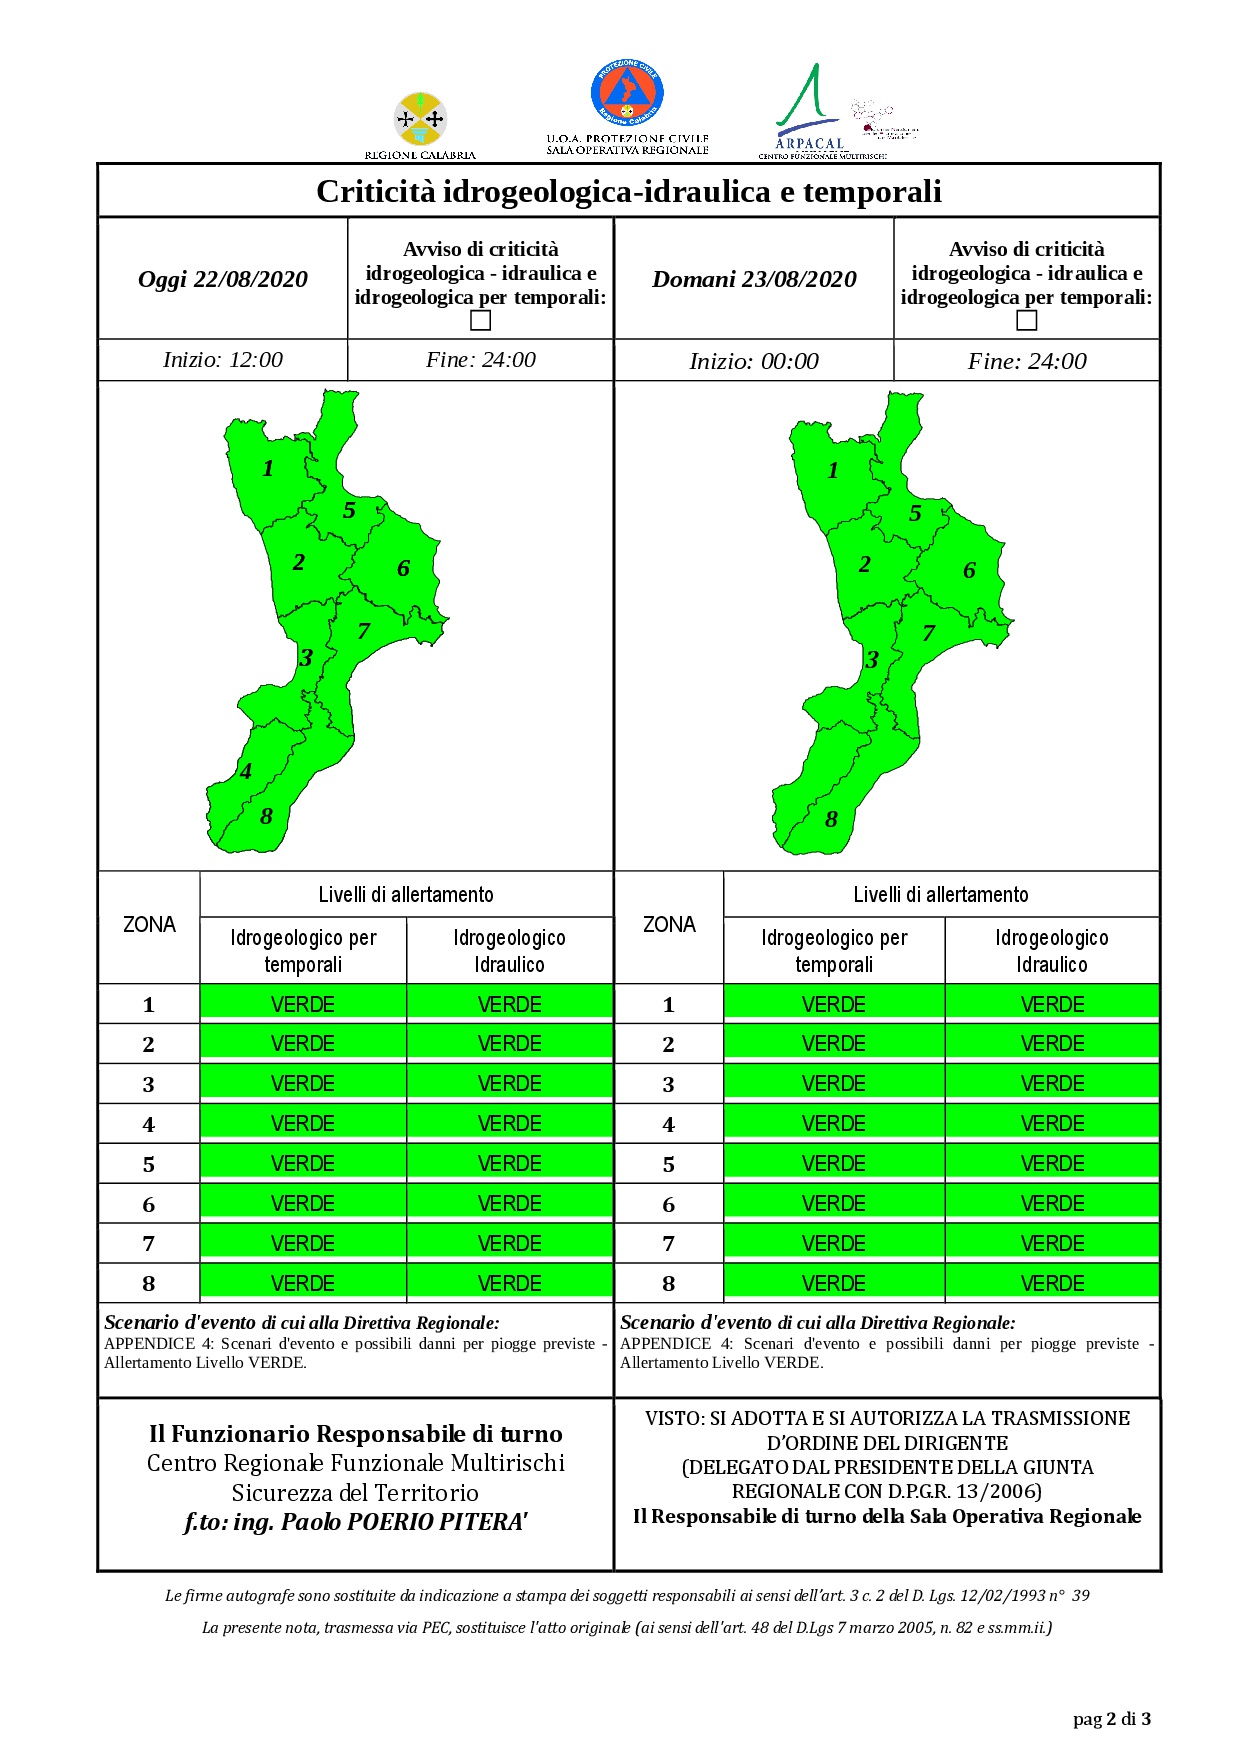 Criticità idrogeologica-idraulica e temporali in Calabria 22-08-2020